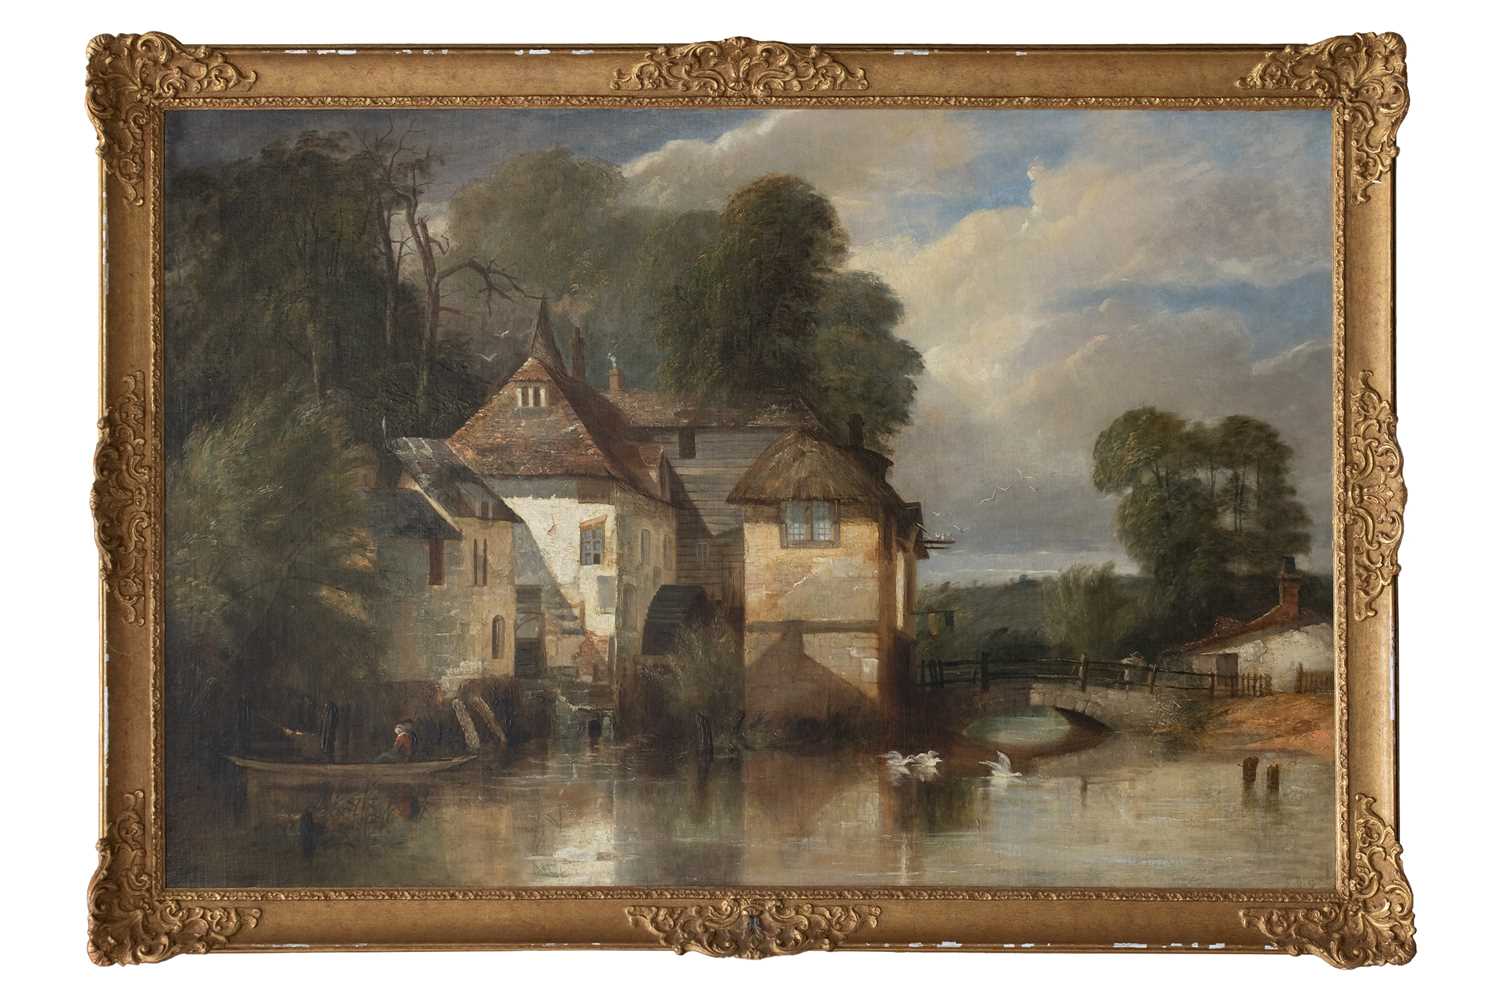 James Baker Pyne (1800-1870), Arundel Mill, signed 'J.B. Pyne' (lower left), oil on canvas, 92.5 x 1